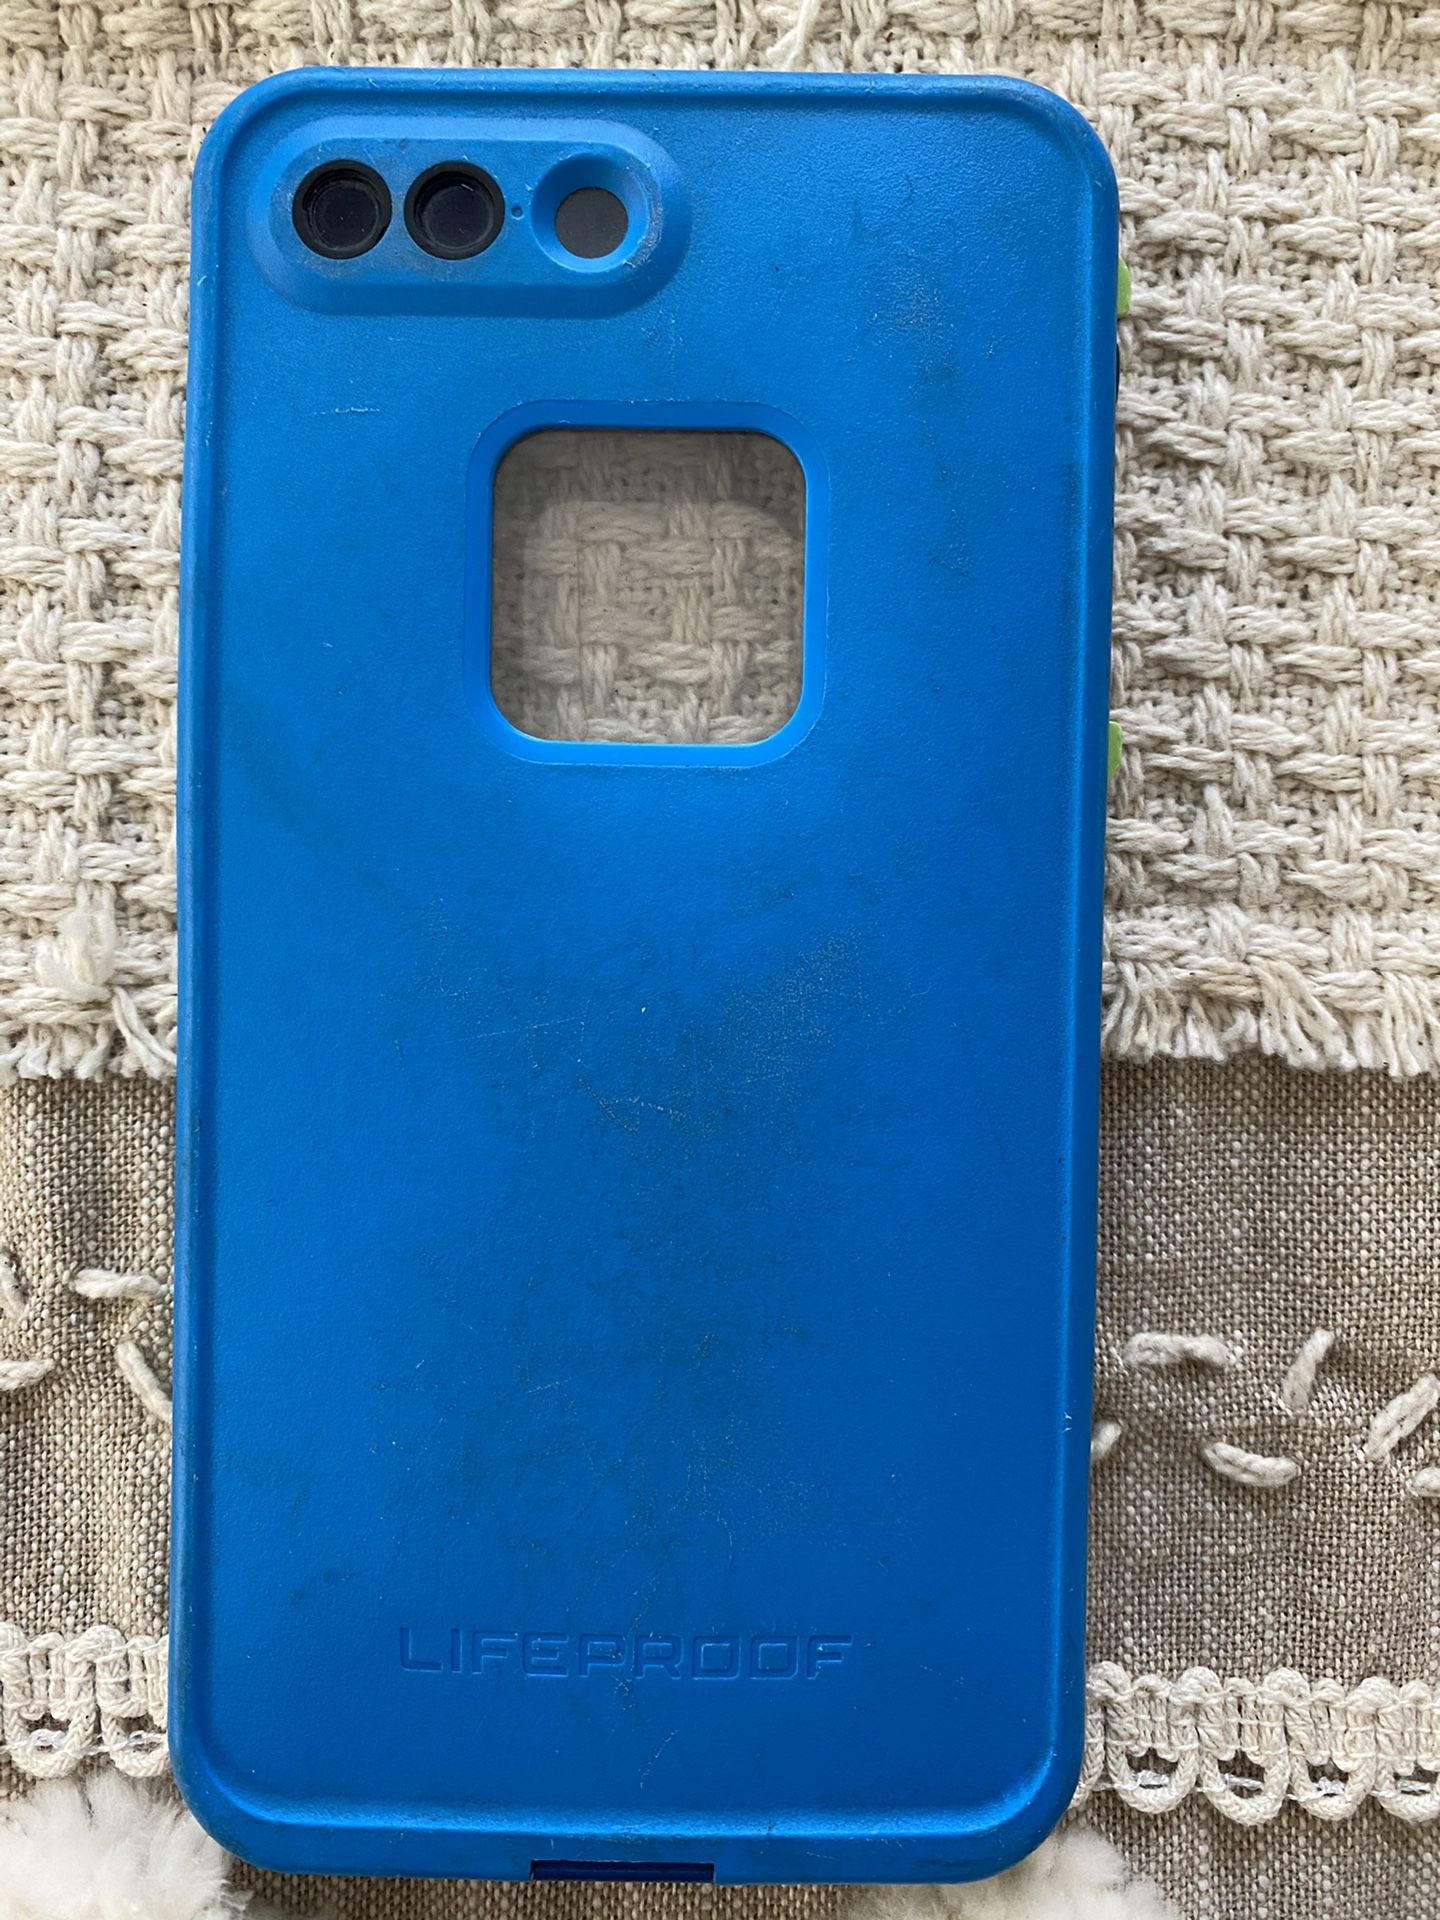 iPhone 7 Plus blue Lifeproof case, phone case, lifetime warranty